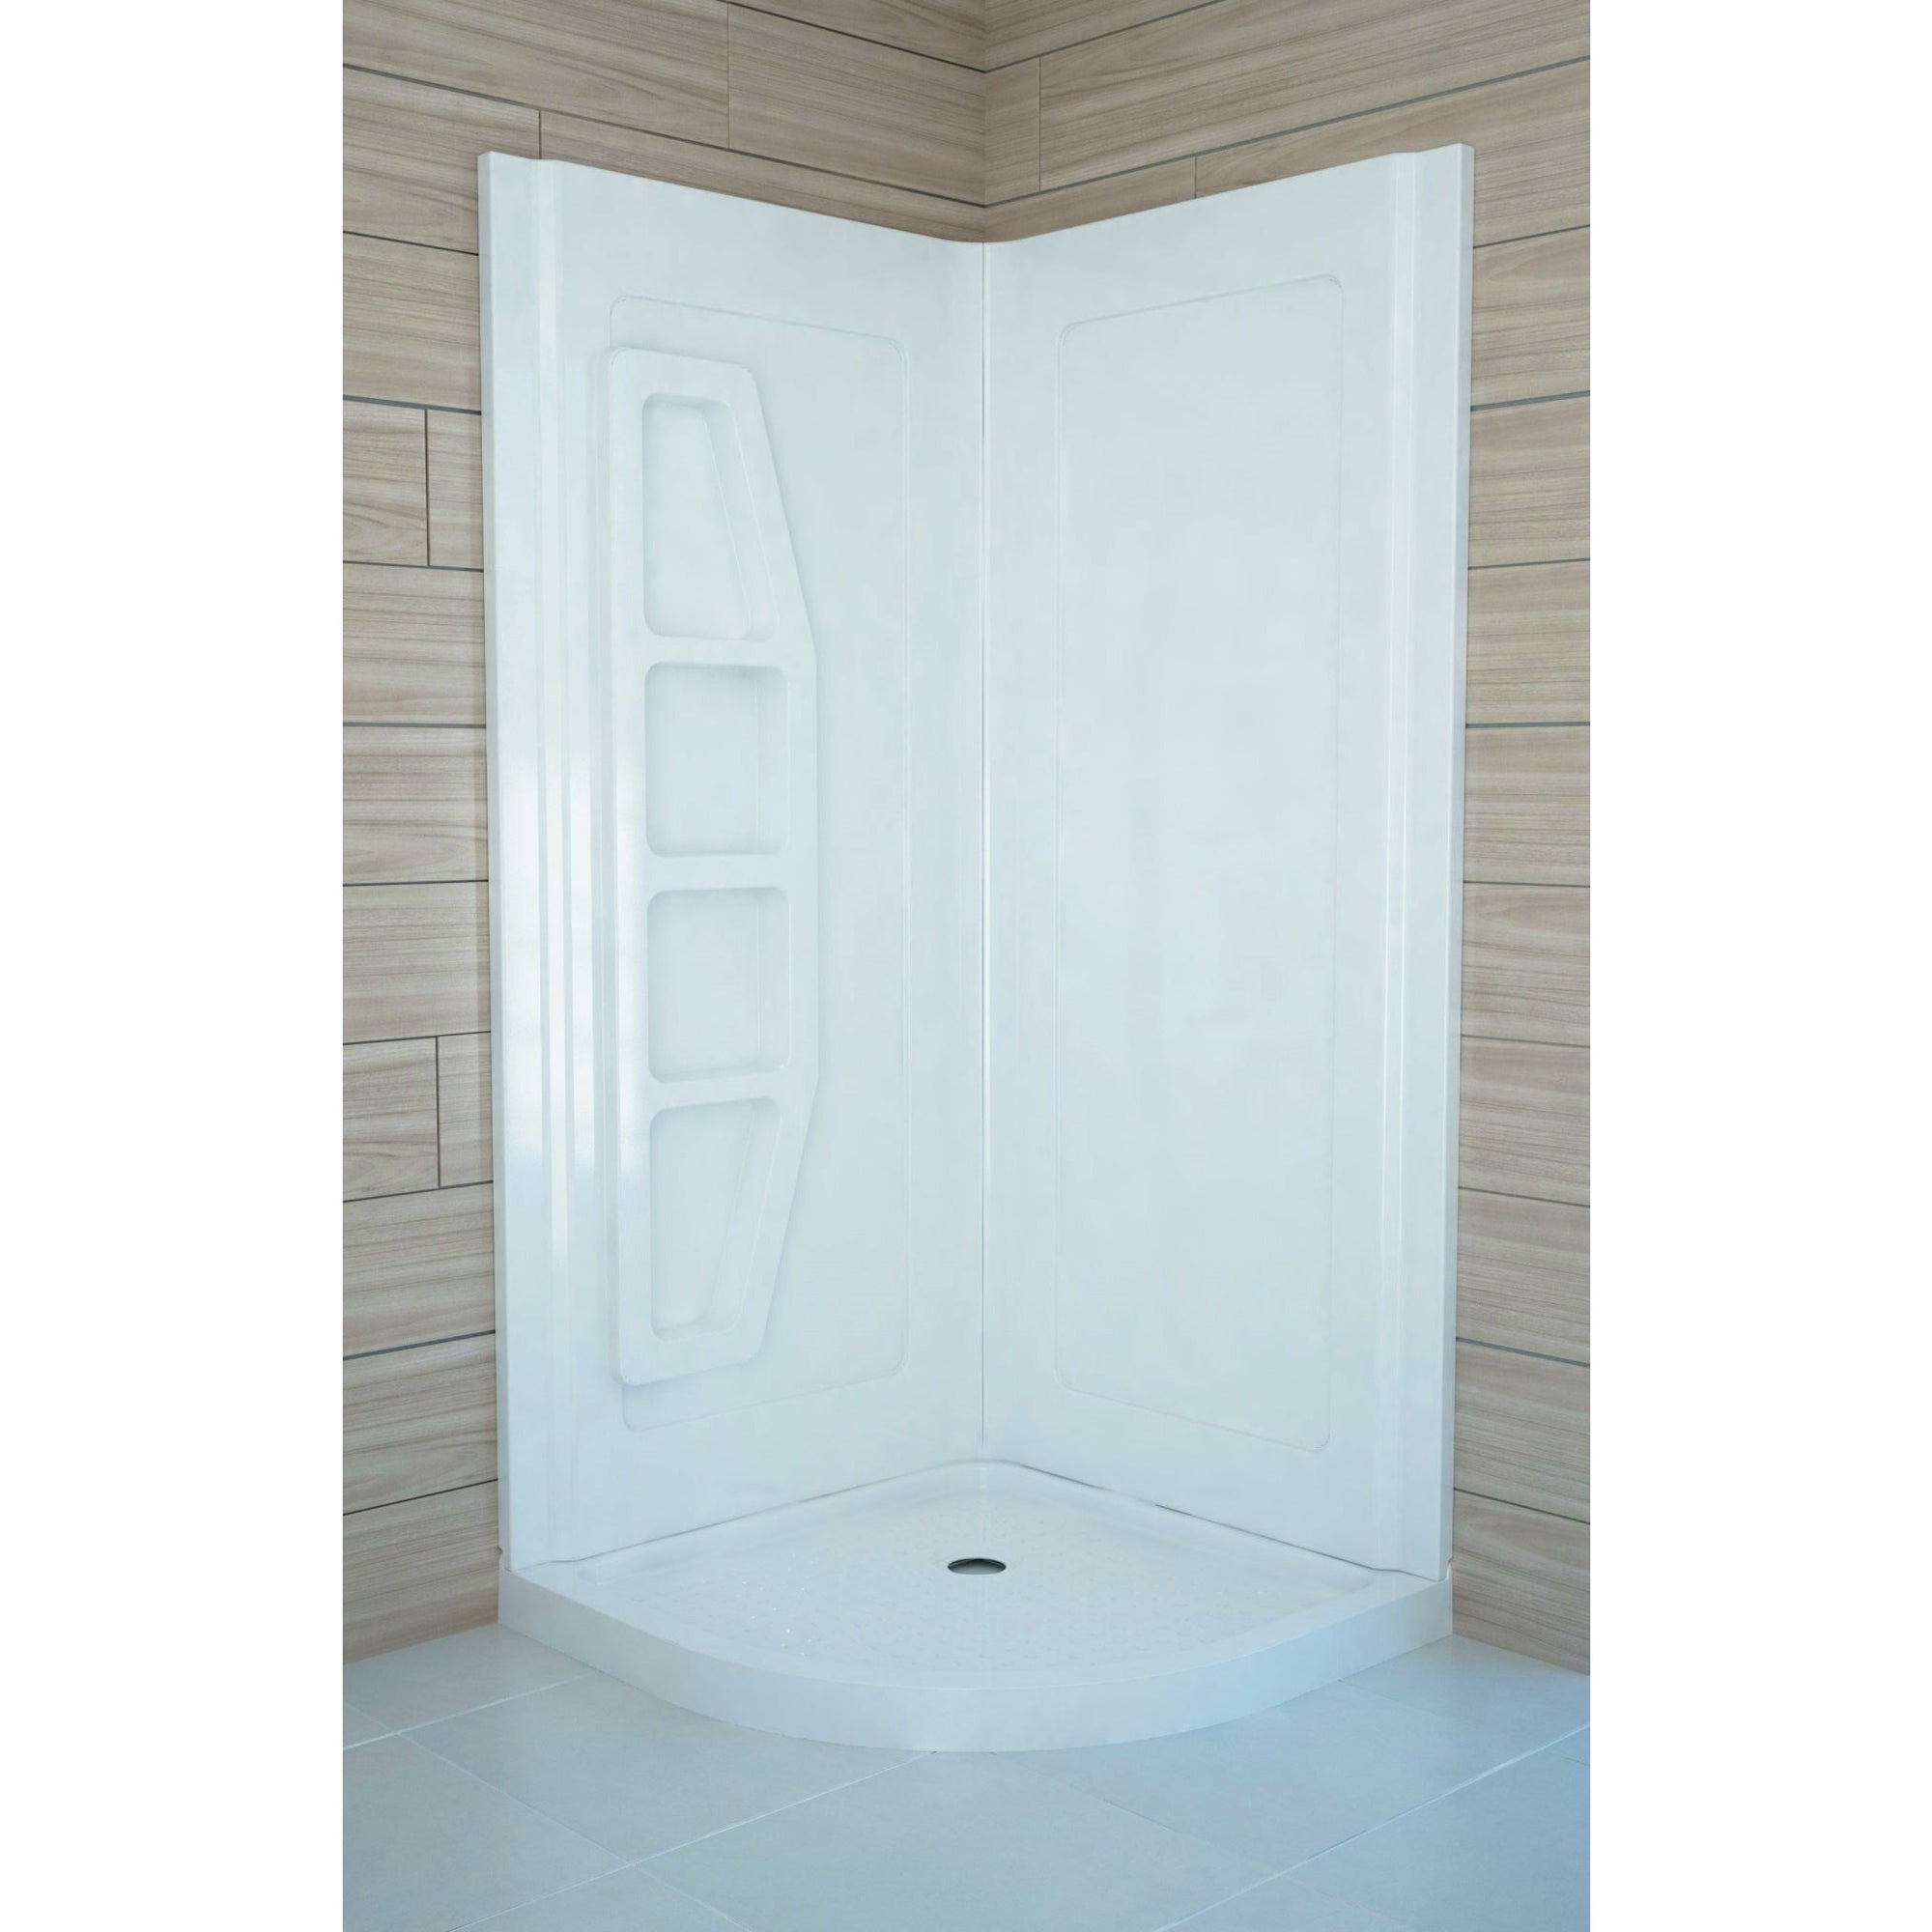 Anzzi Gradient 36 in. x 36 in. x 74 in. 2-piece DIY Friendly Corner Shower Surround in White SW-AZ006WH - Vital Hydrotherapy